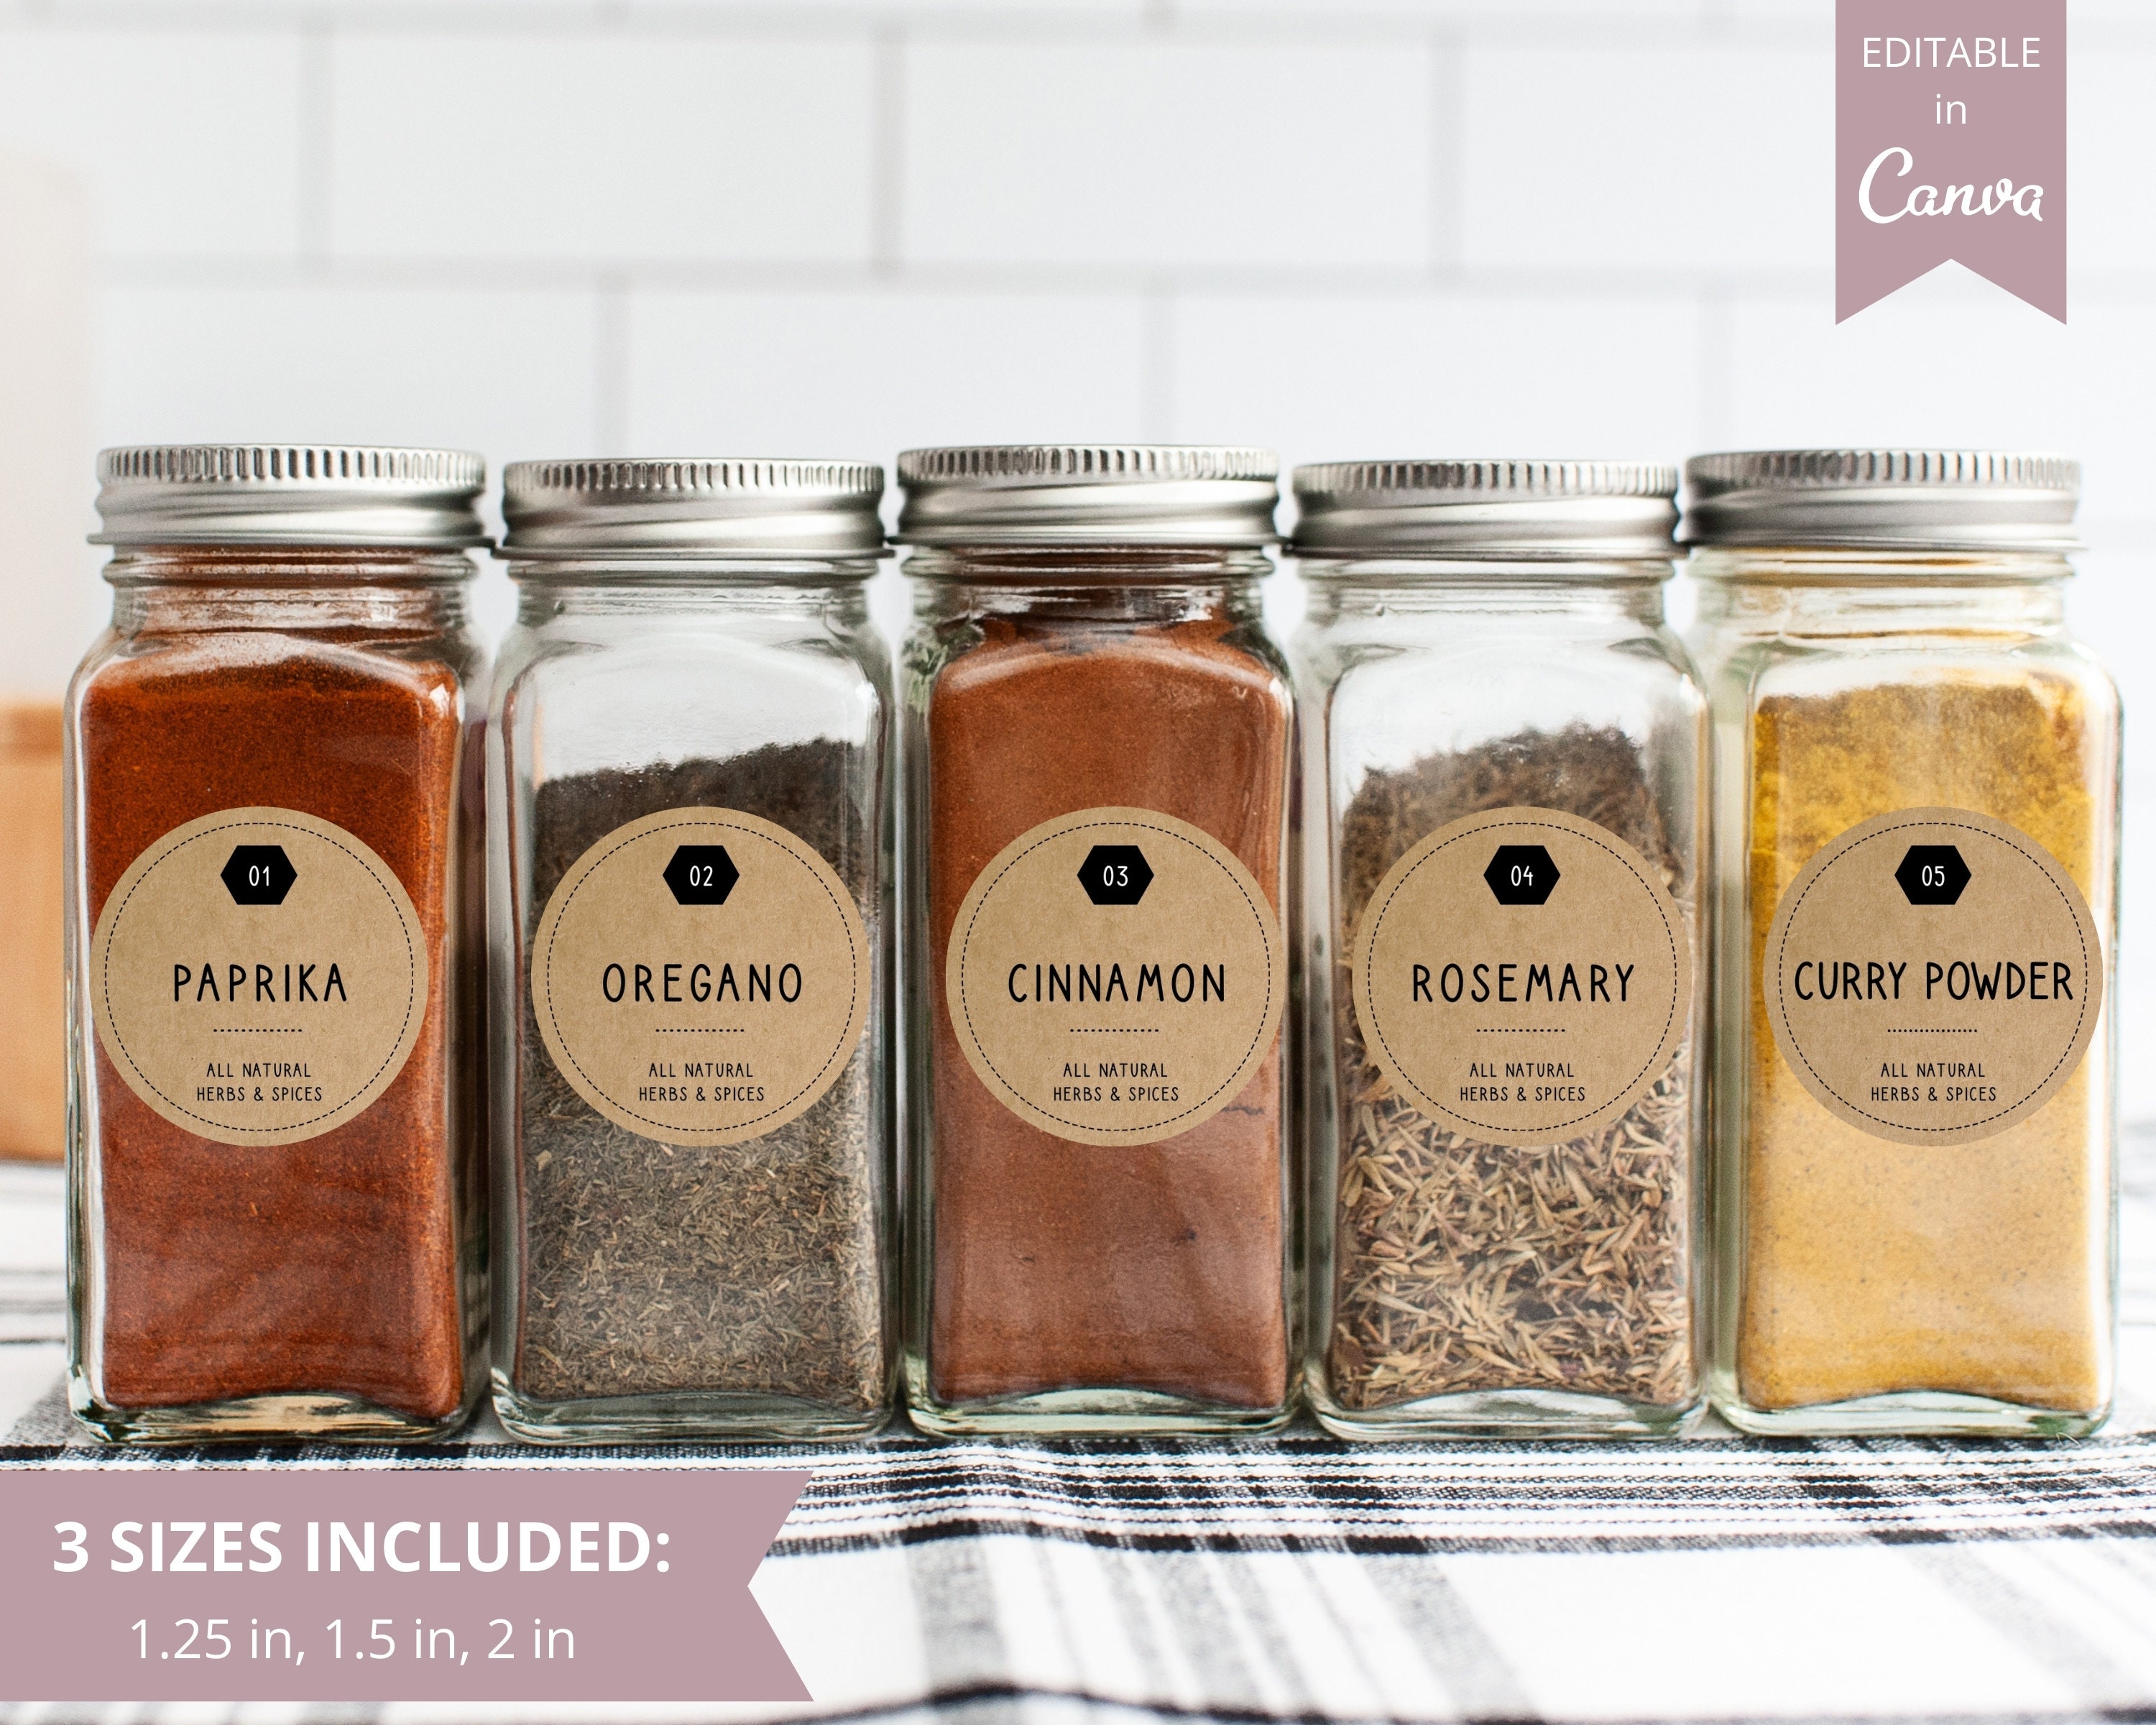 Spice Jar Label Template, Printable Seasoning Stickers, DIY Herbs Spice  Labels, Editable Kitchen Organize Labels CORJL LA050 lima (Download Now) 